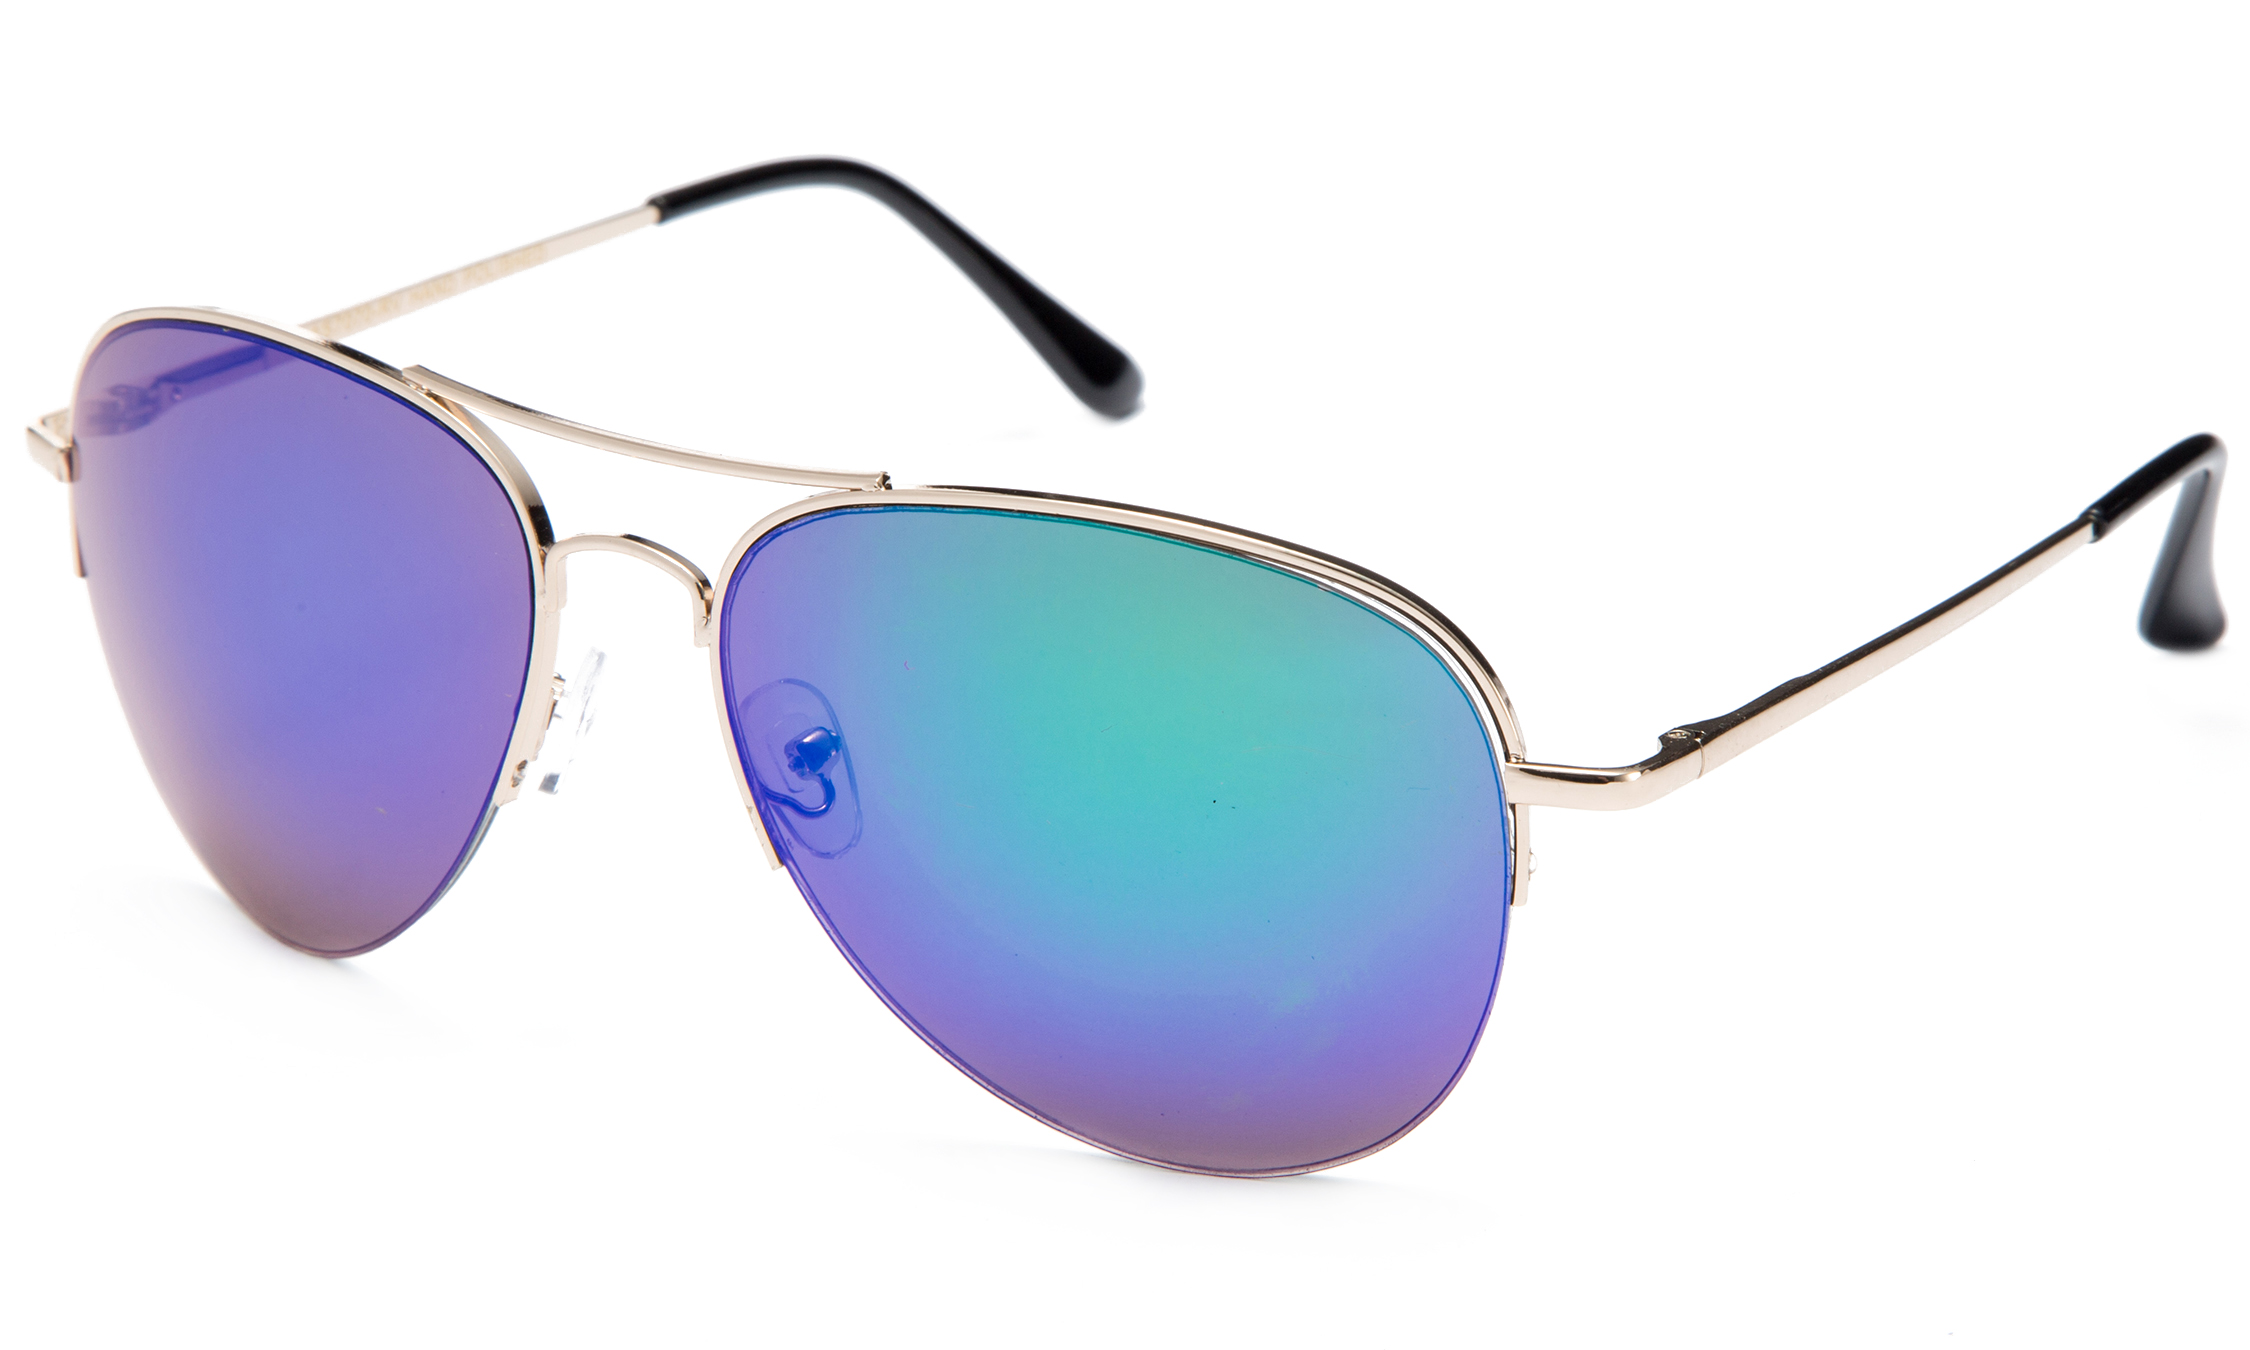 Newbee Fashion -Classic Aviator Sunglasses Flash Full Mirror lenses Semi Half Frame for Men Women with Spring Hinge UV Protection - image 1 of 2